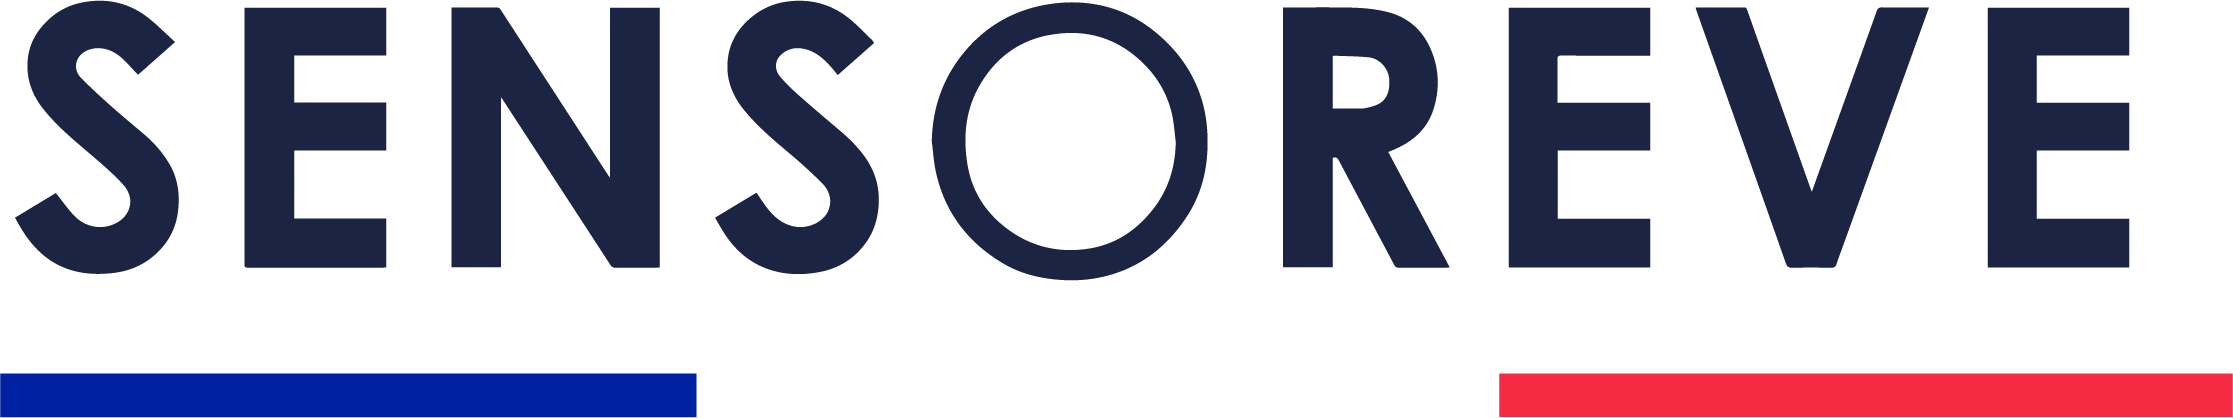 logo-sensoreve